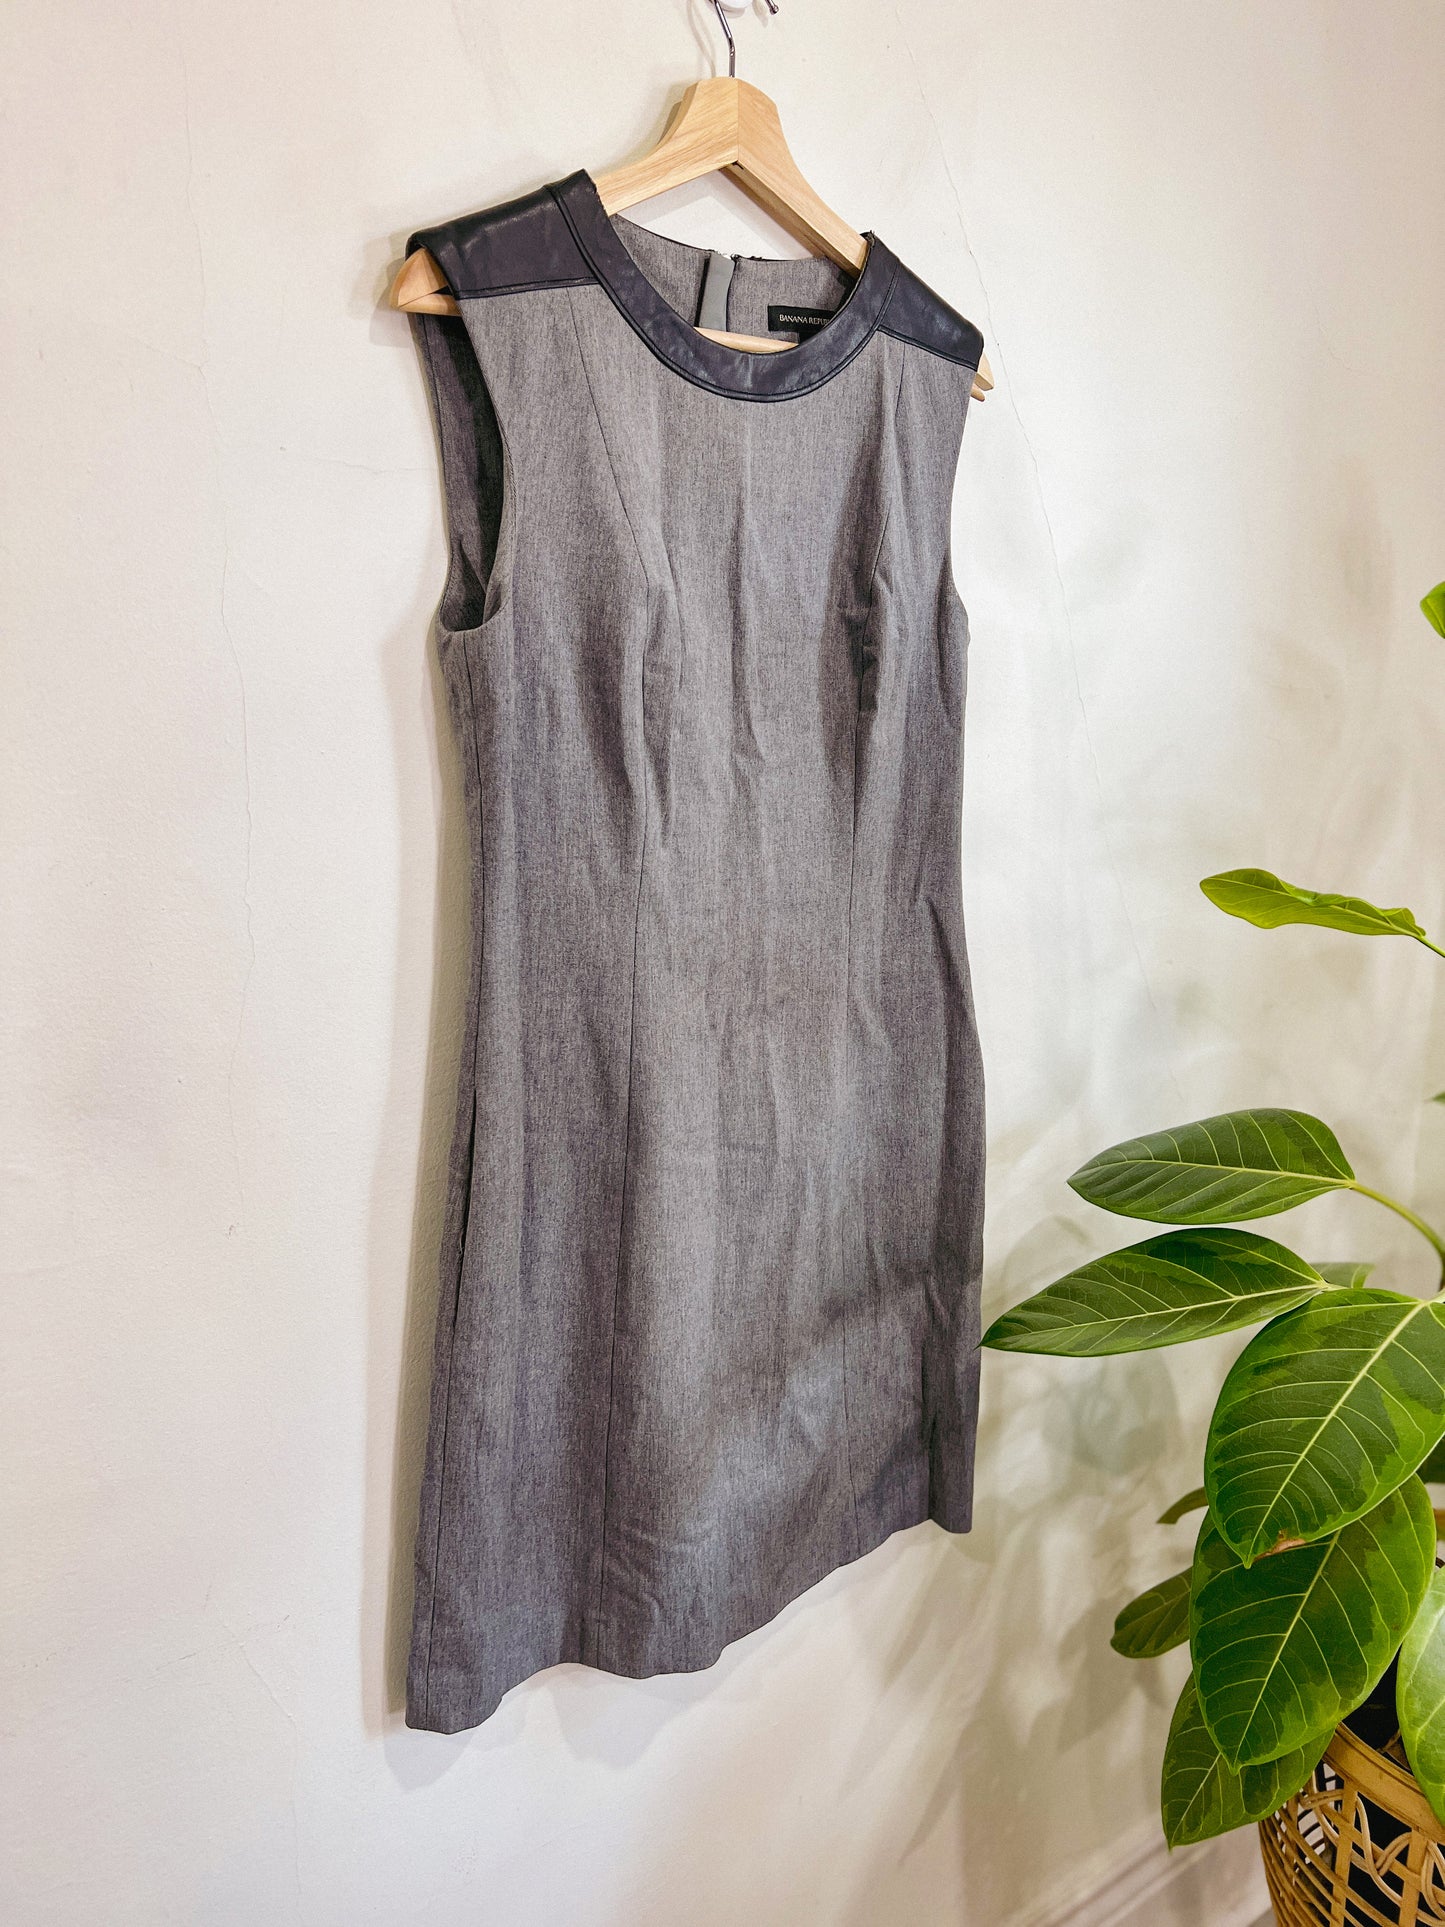 Banana Republic Grey Dress with Faux Leather Trim (Size 8)